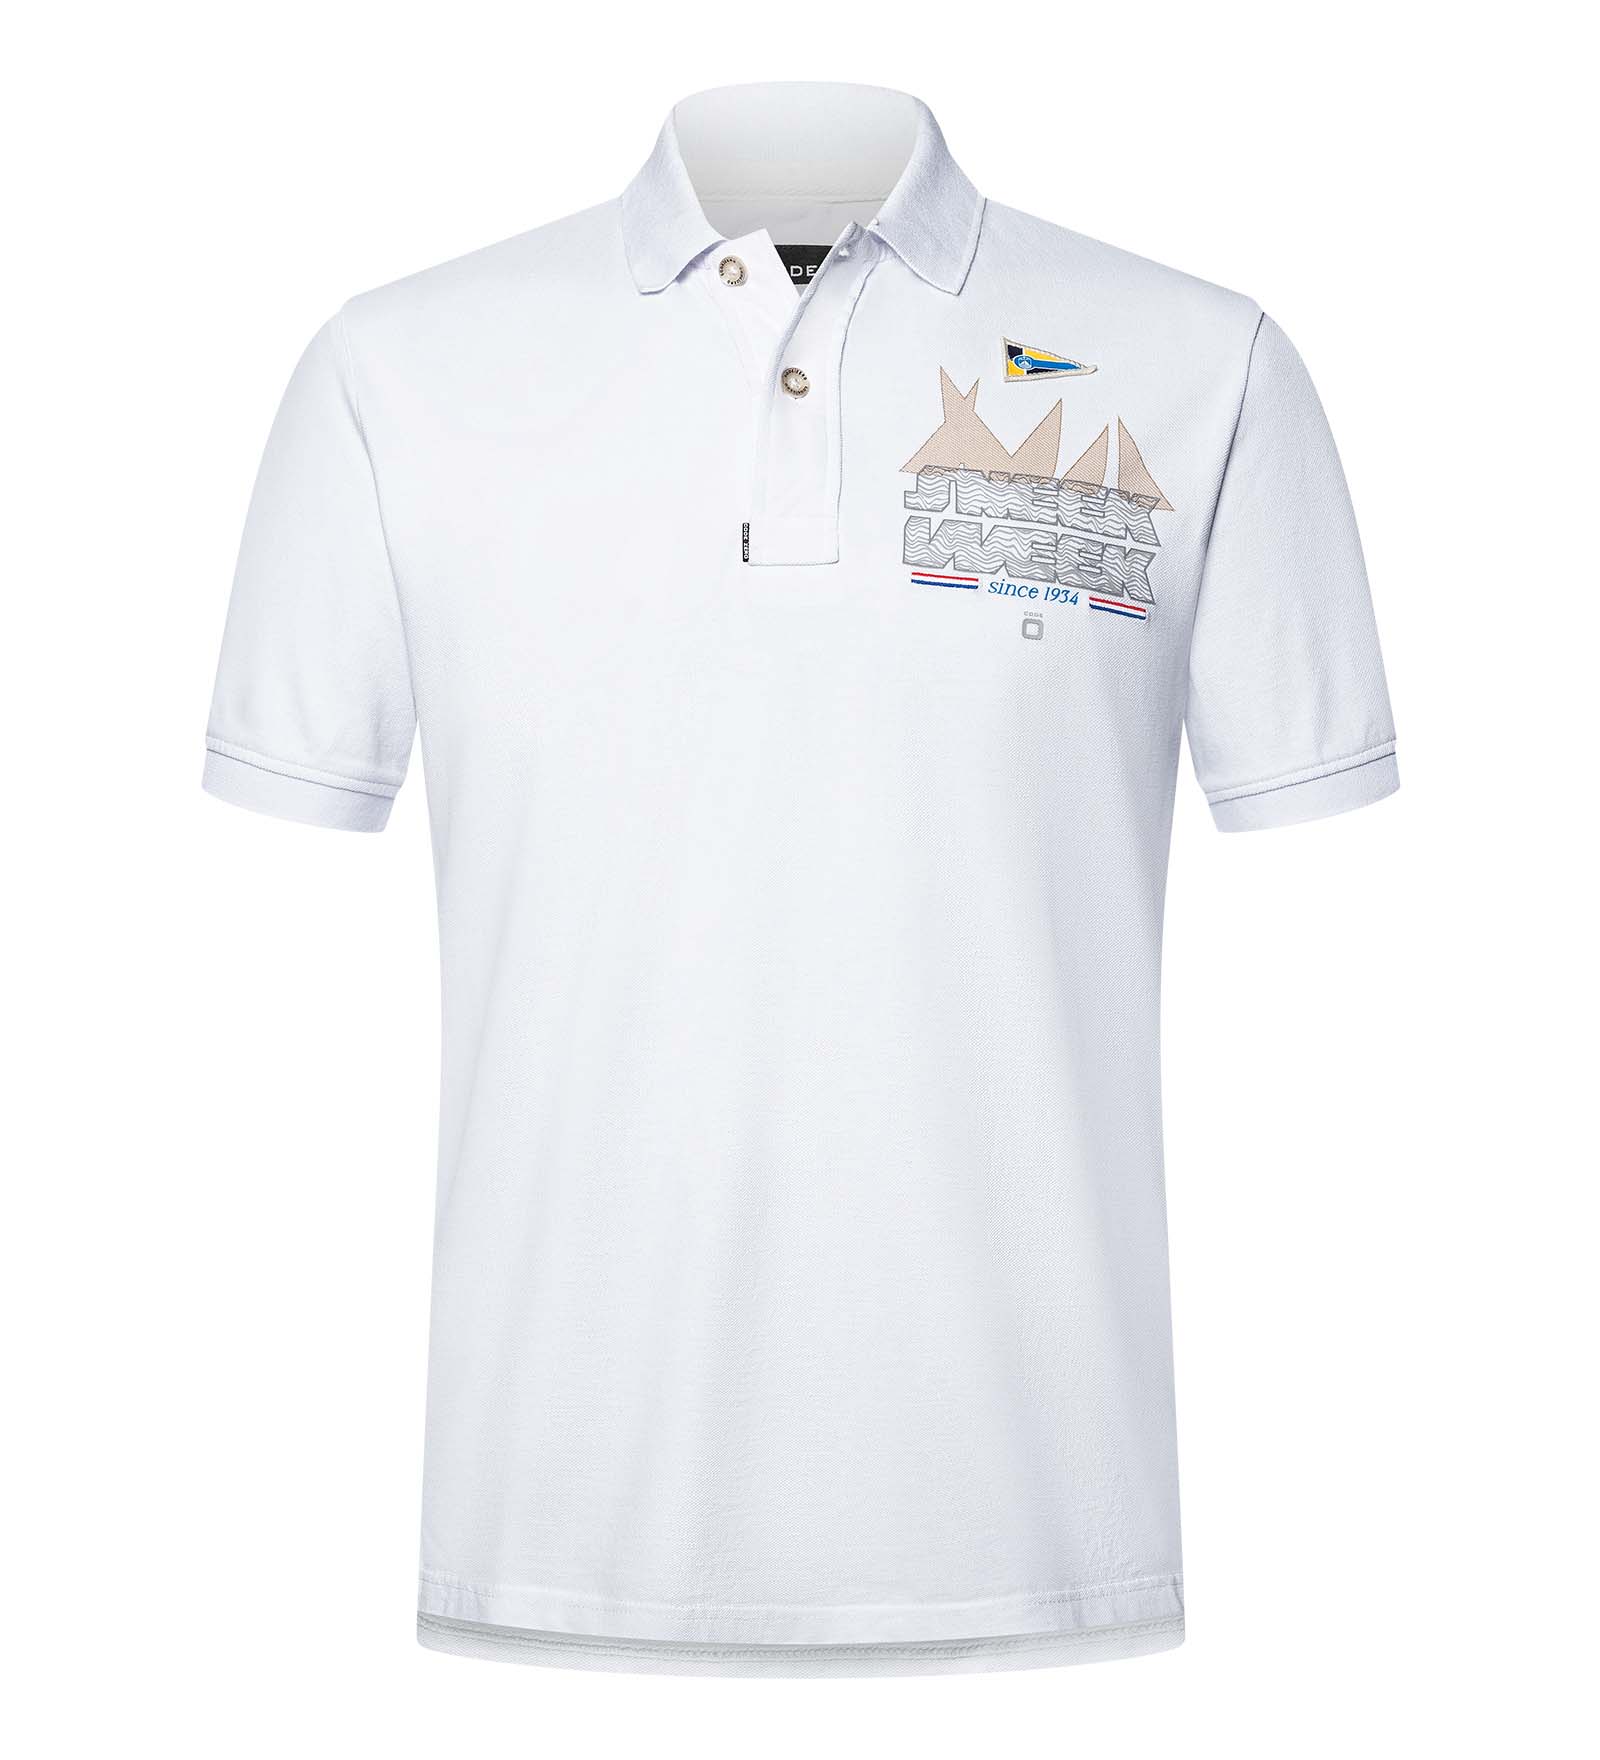 Polo shirts for men and women | CODE-ZERO Online Shop Online Shop